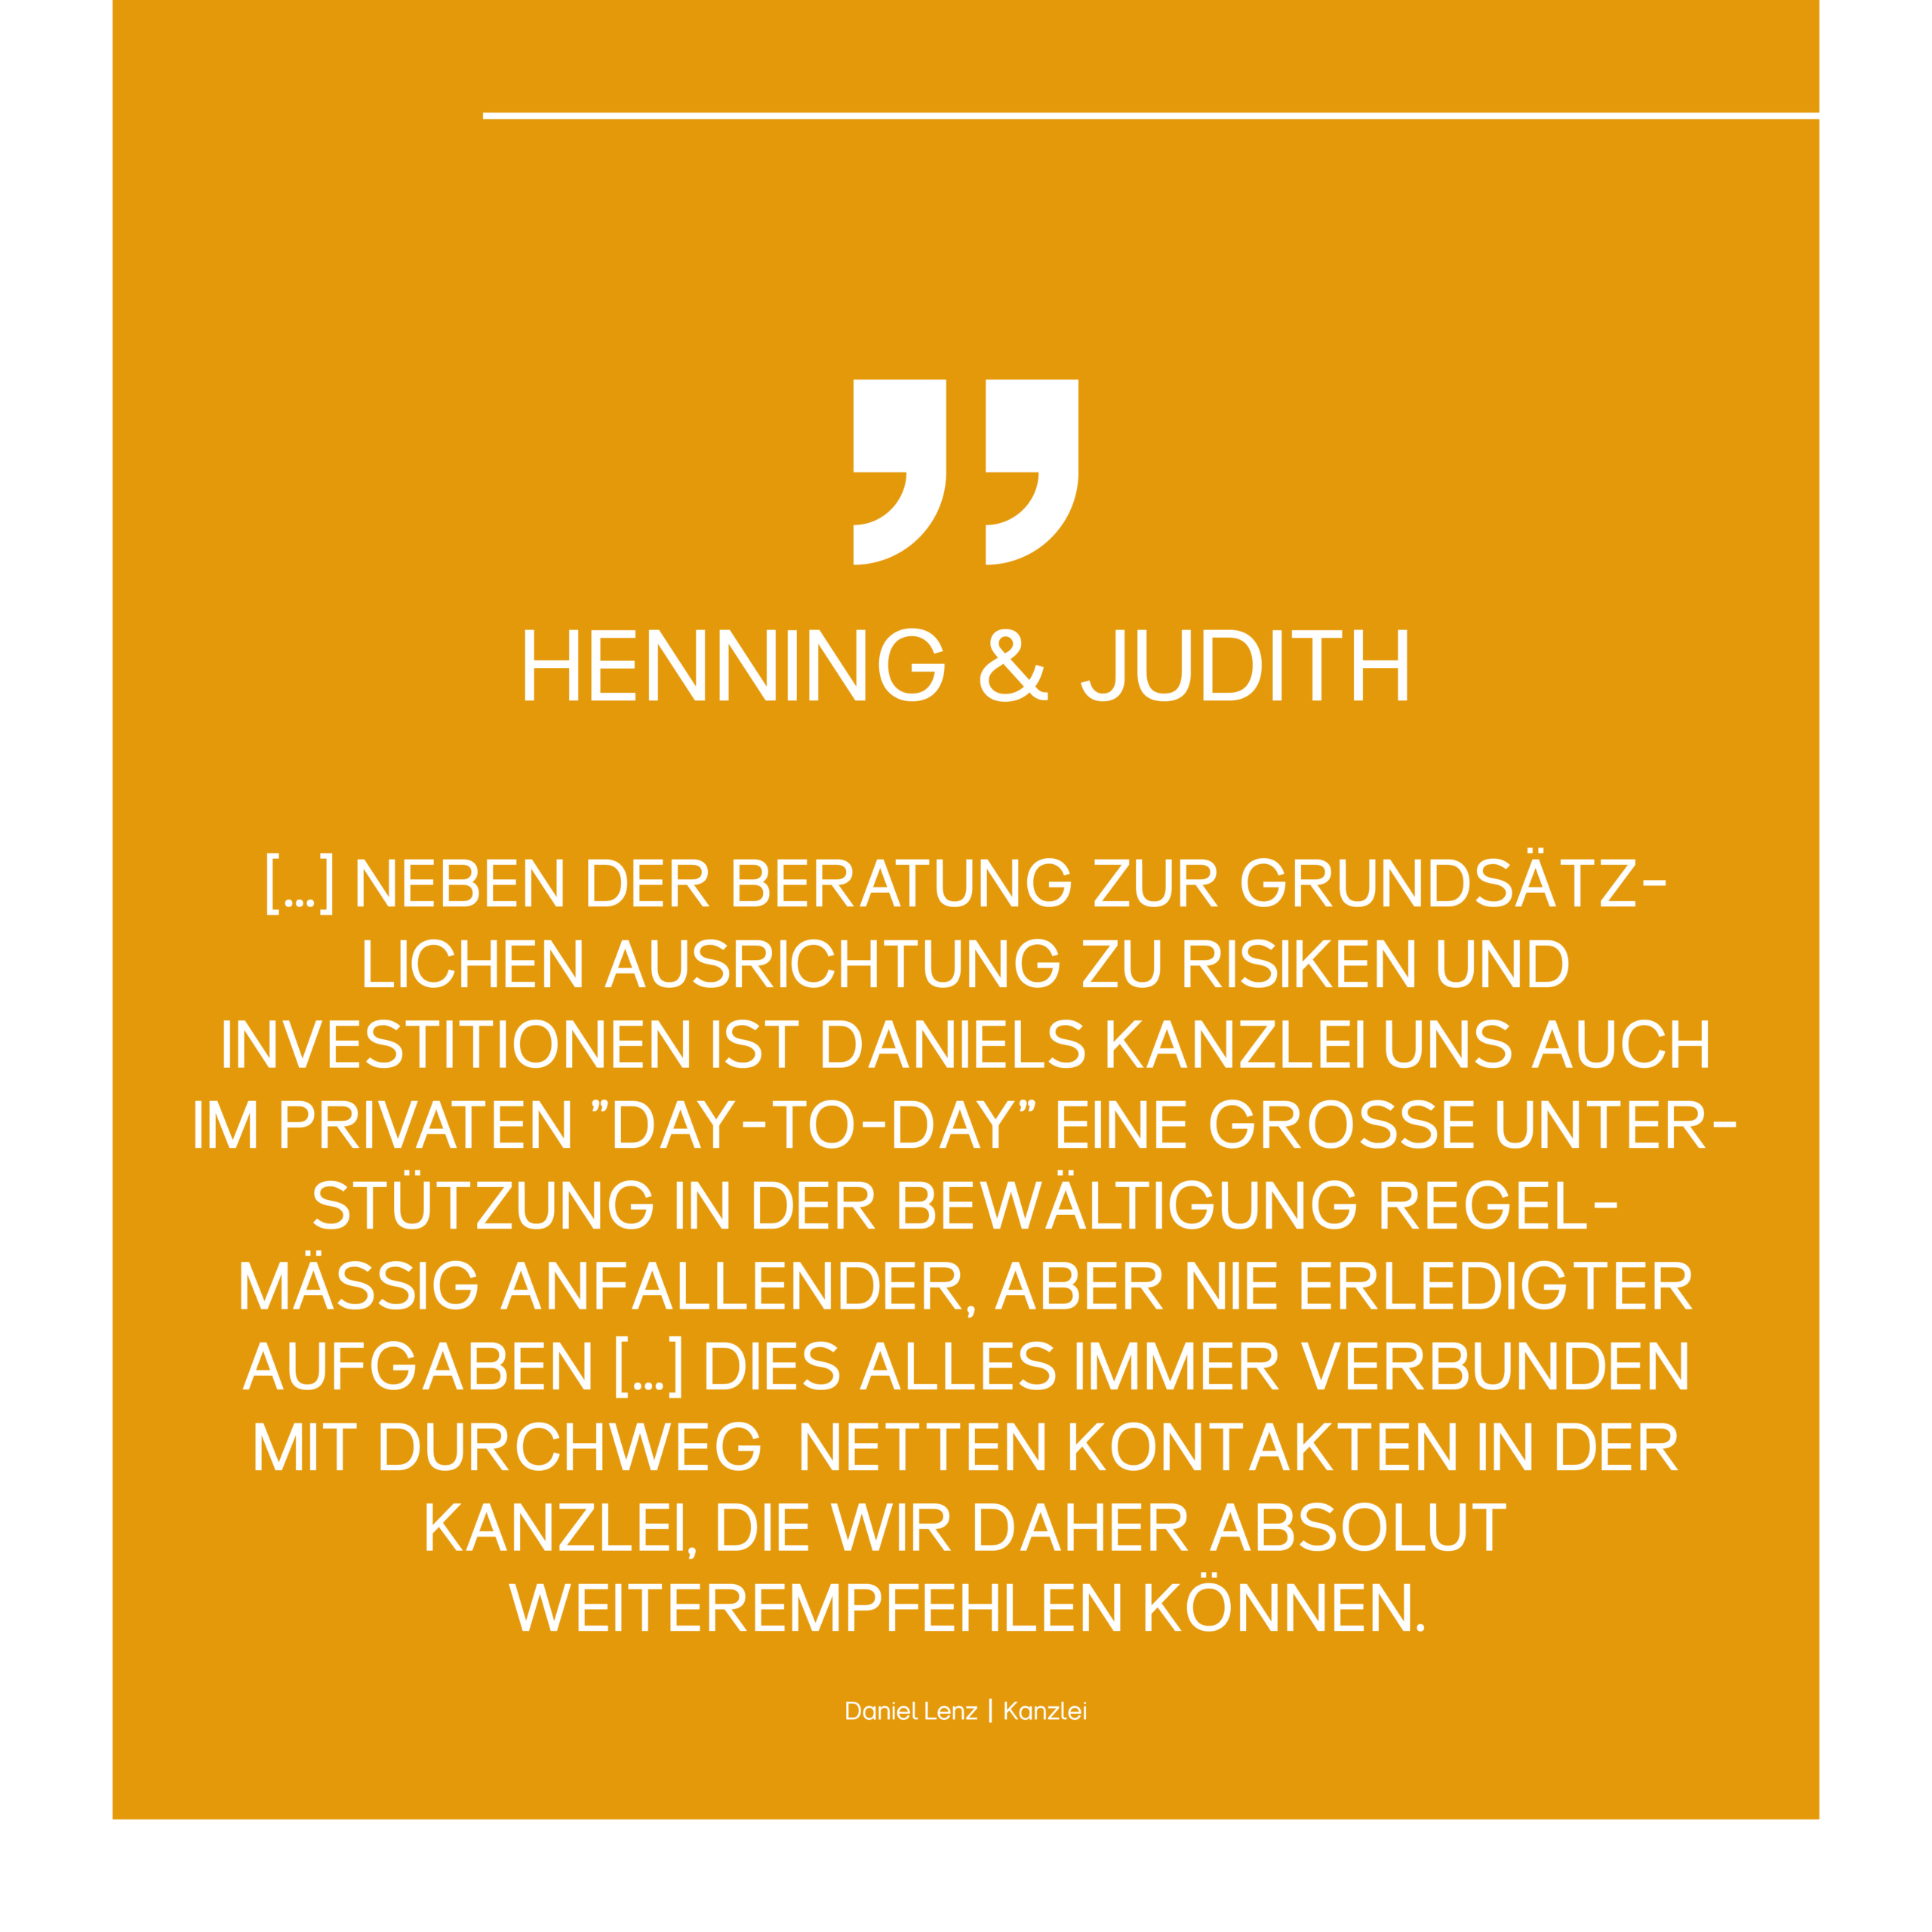 Mandantenmeinung - Henning & Judith